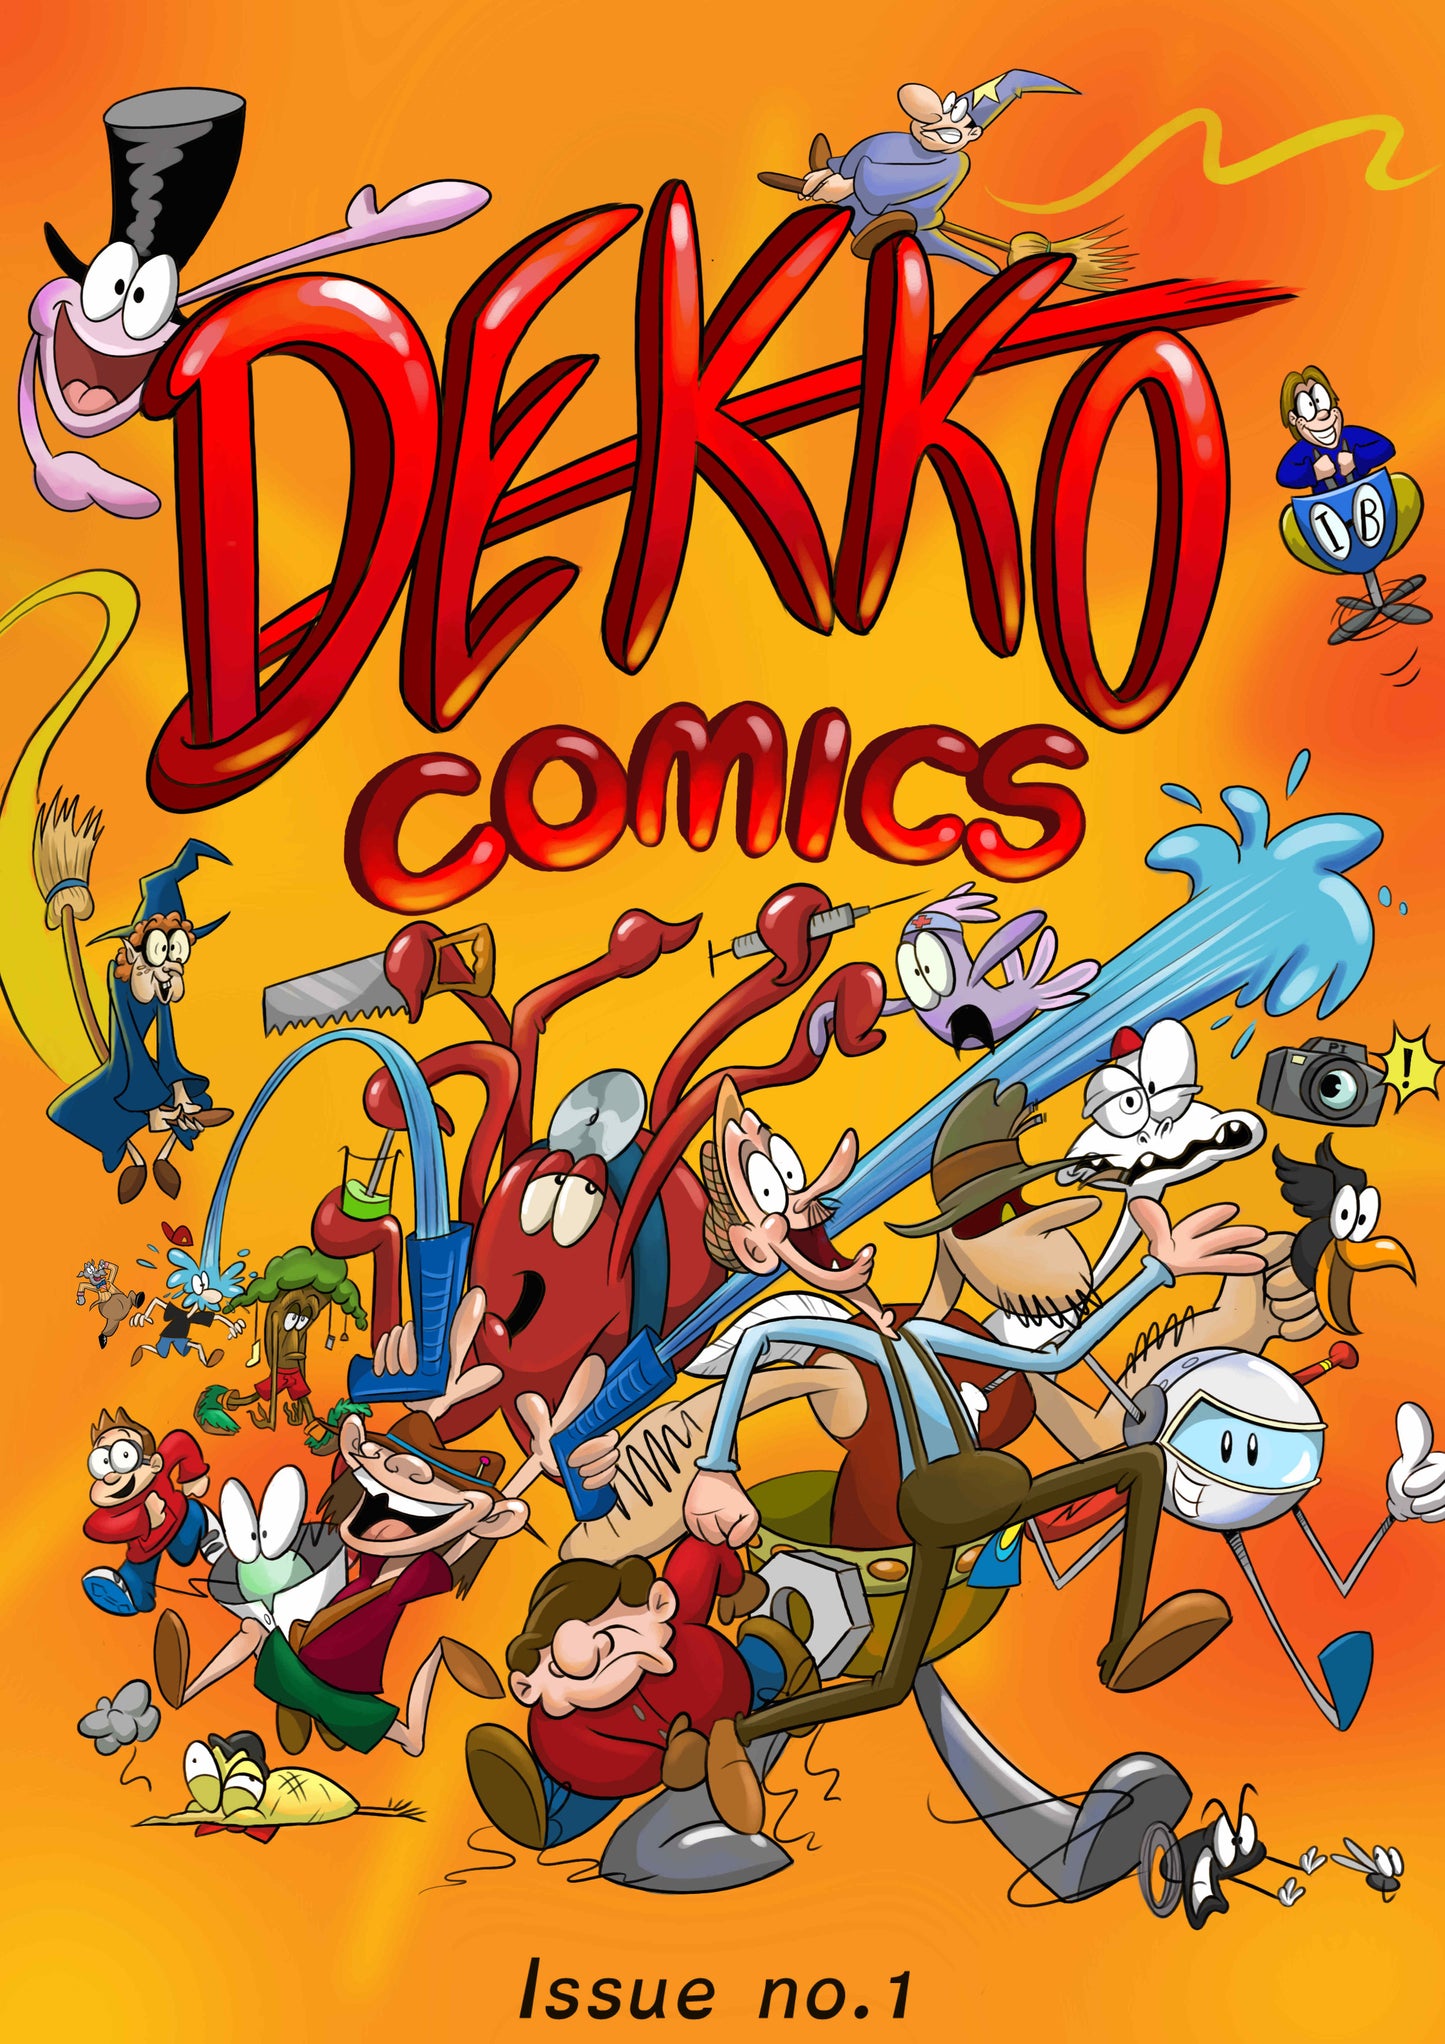 Dekko Comics - Issues 1 to 4 Catch-up Set